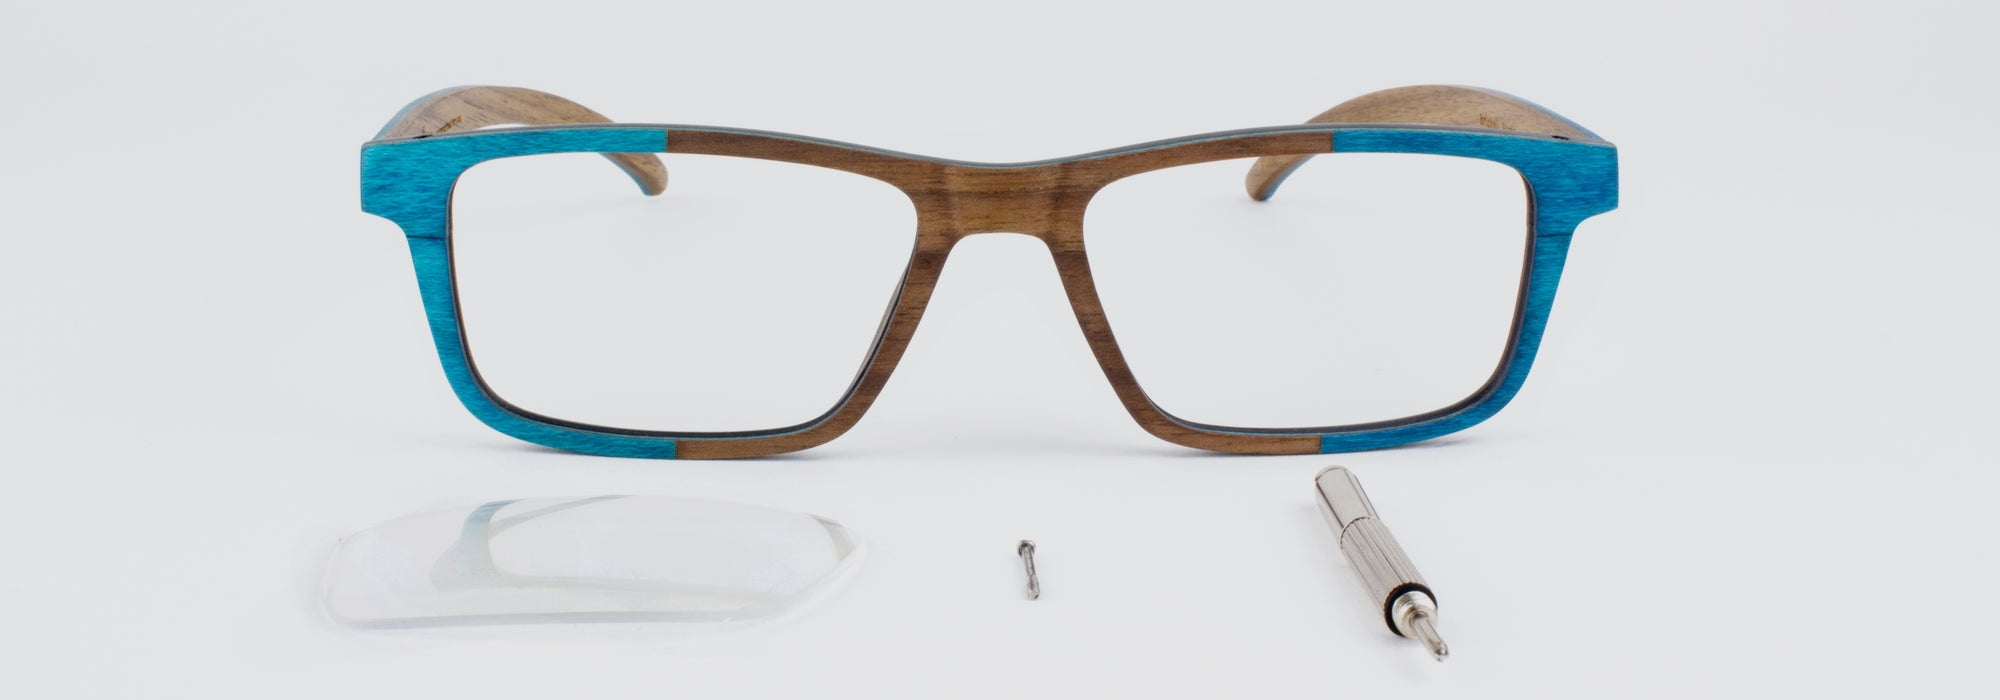 Simple & Chic: Effortlessly Installing Lenses in Tommy Owens Wooden Eyewear